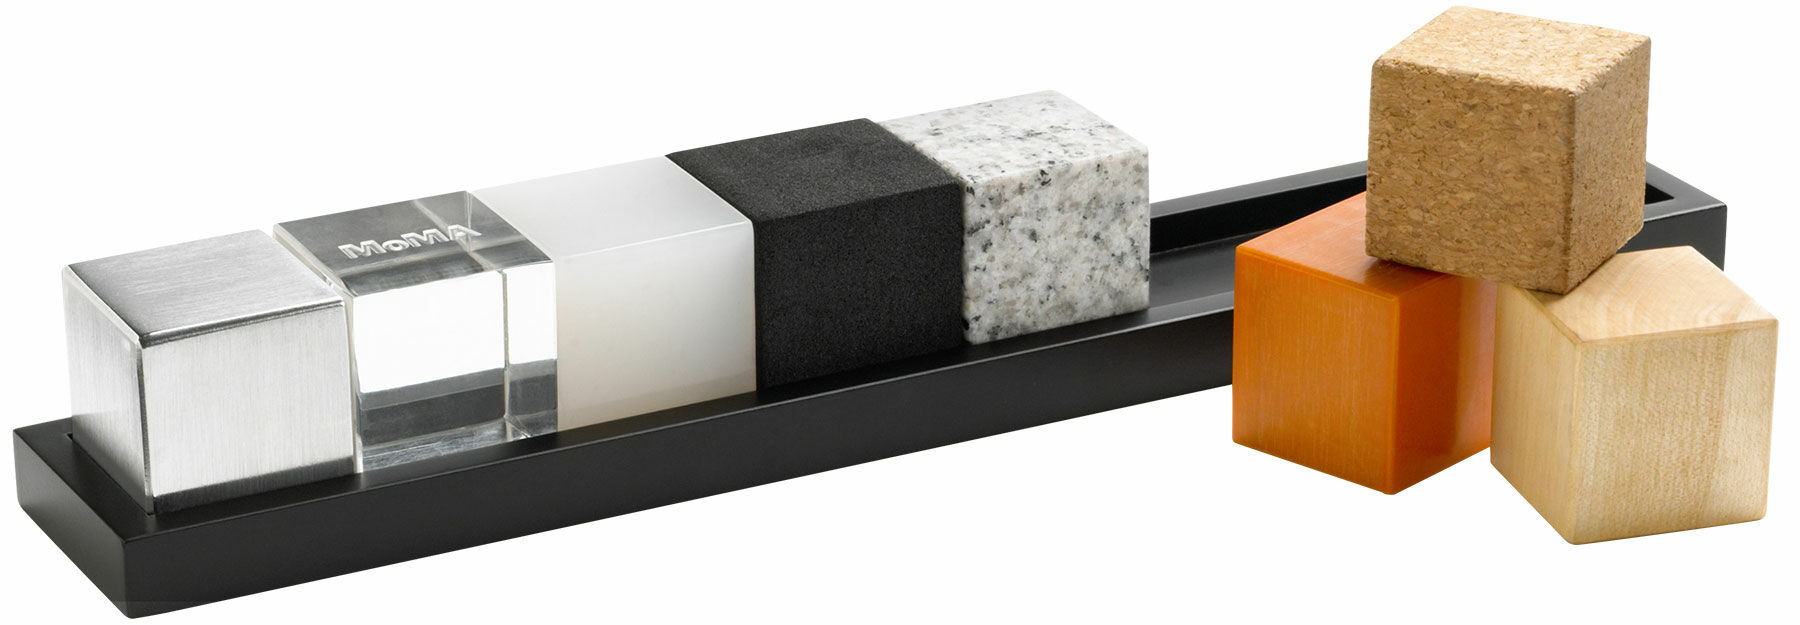 Cube d'architecte - Collection MoMA - Design Bennett/Bonevardi